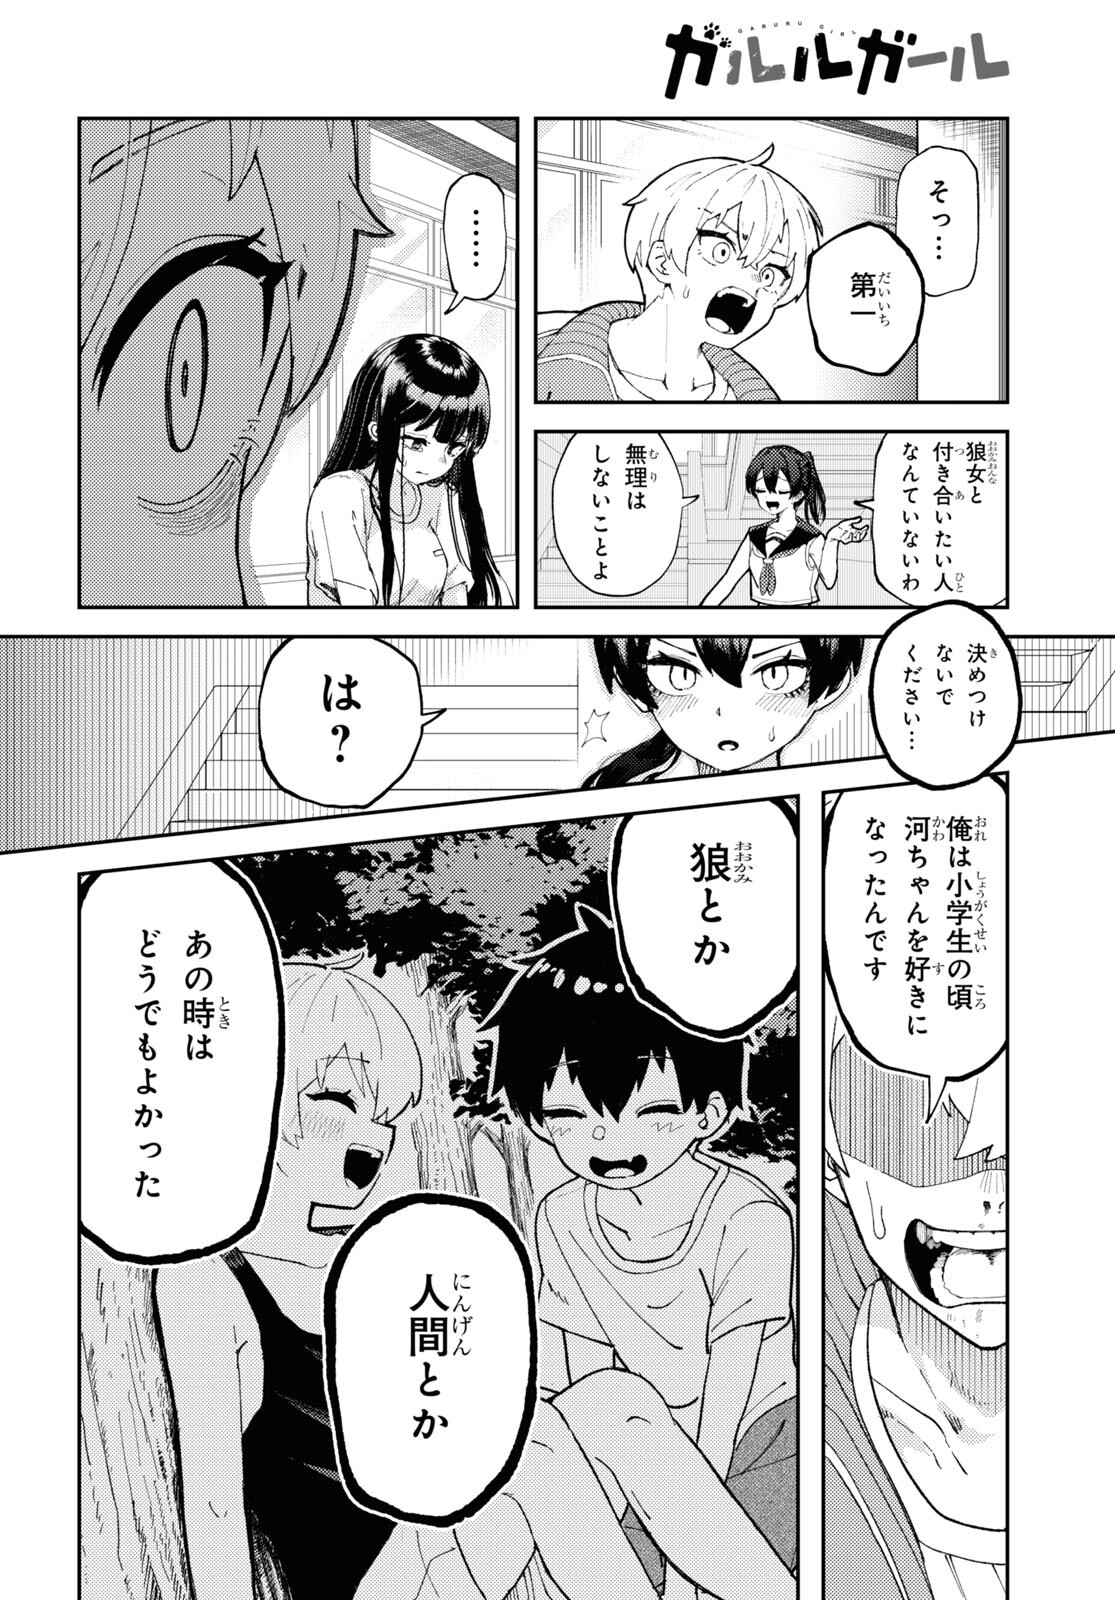 Garuru Girl - Chapter 1 - Page 39